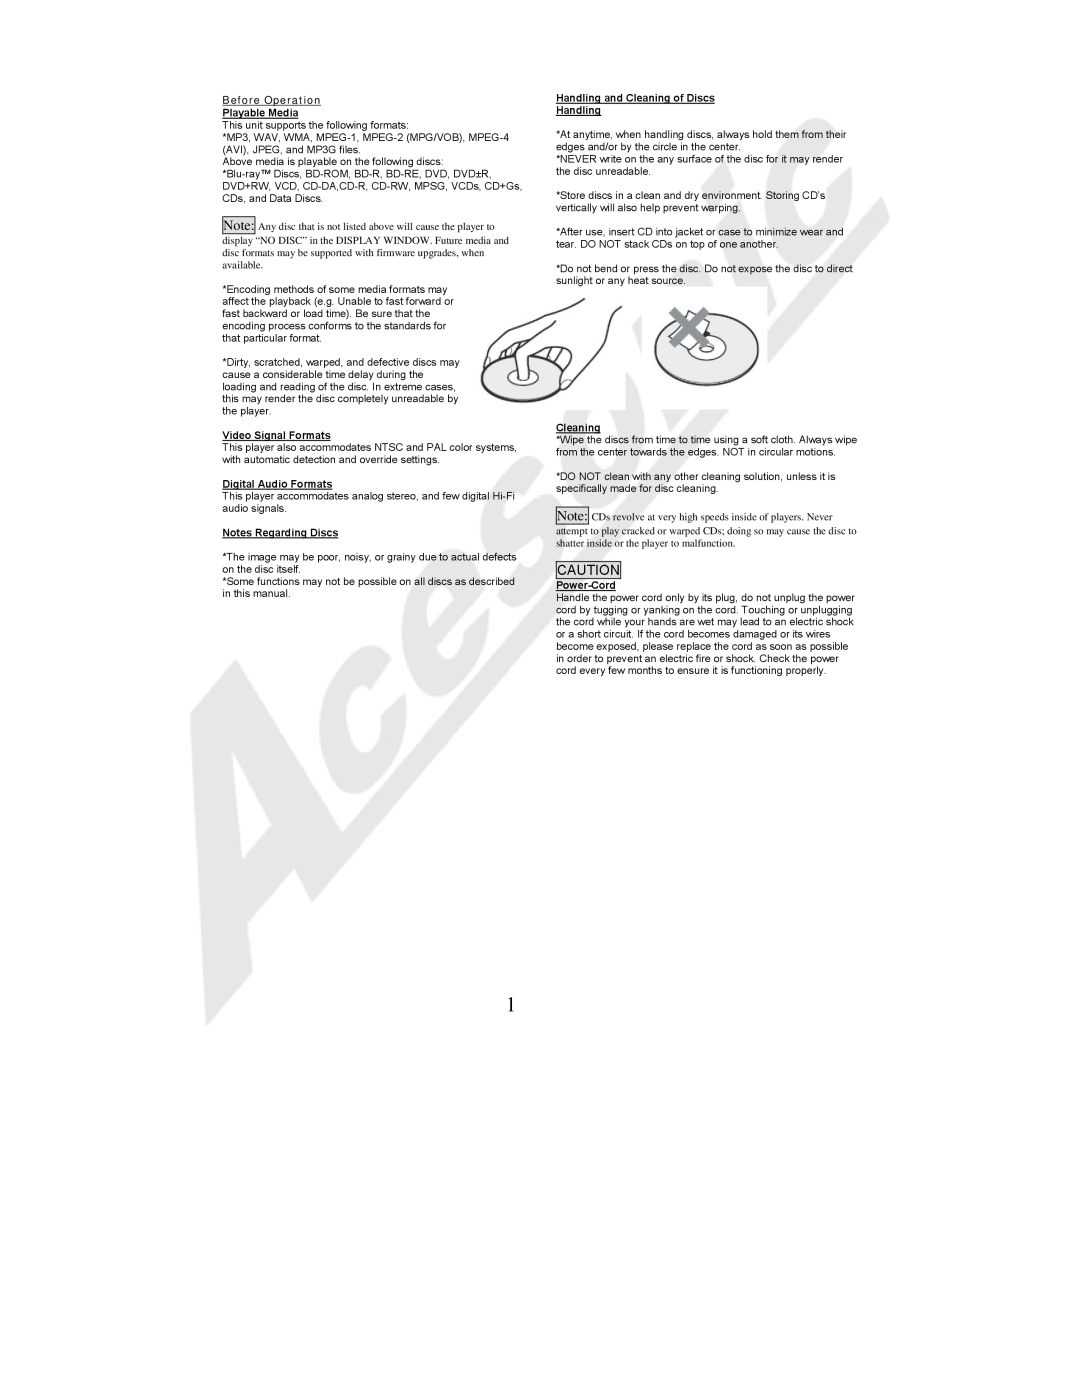 Acesonic BDK-2000 Before Operation Playable Media, Video Signal Formats, Digital Audio Formats, Notes Regarding Discs 